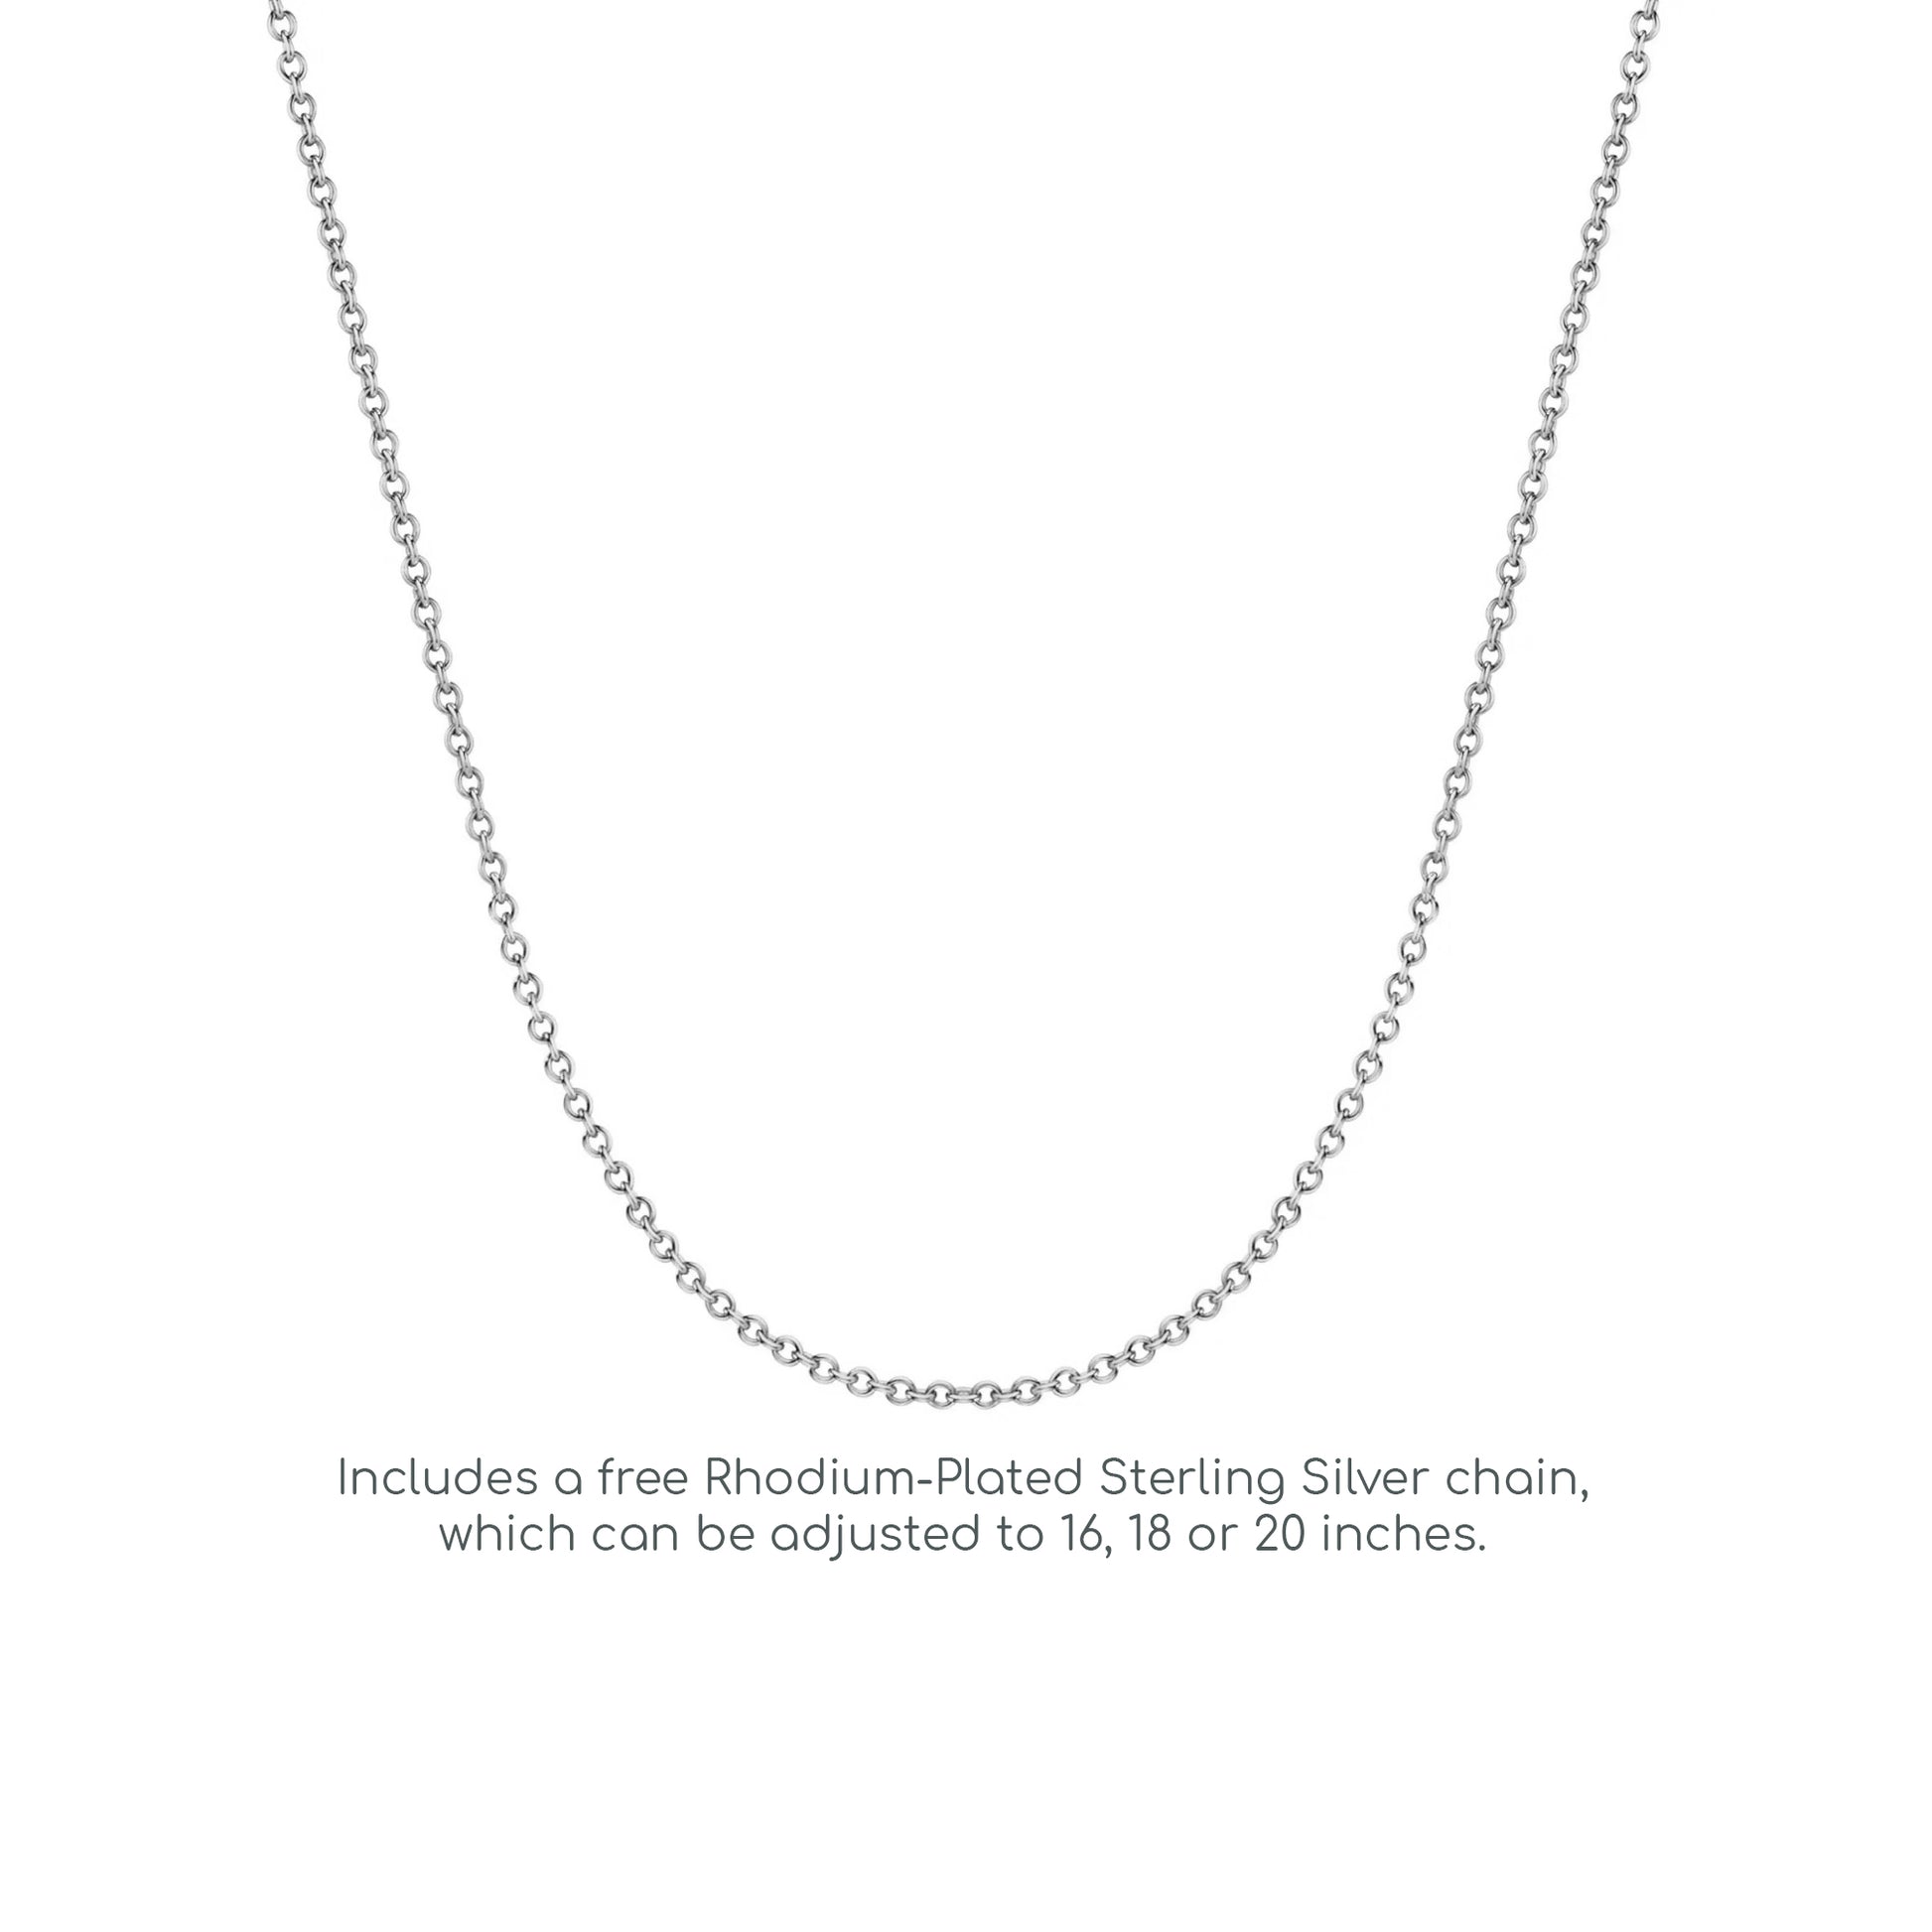 Silver  Blue Created Topaz Celtic Trinity Knot Necklace - GVP570BT